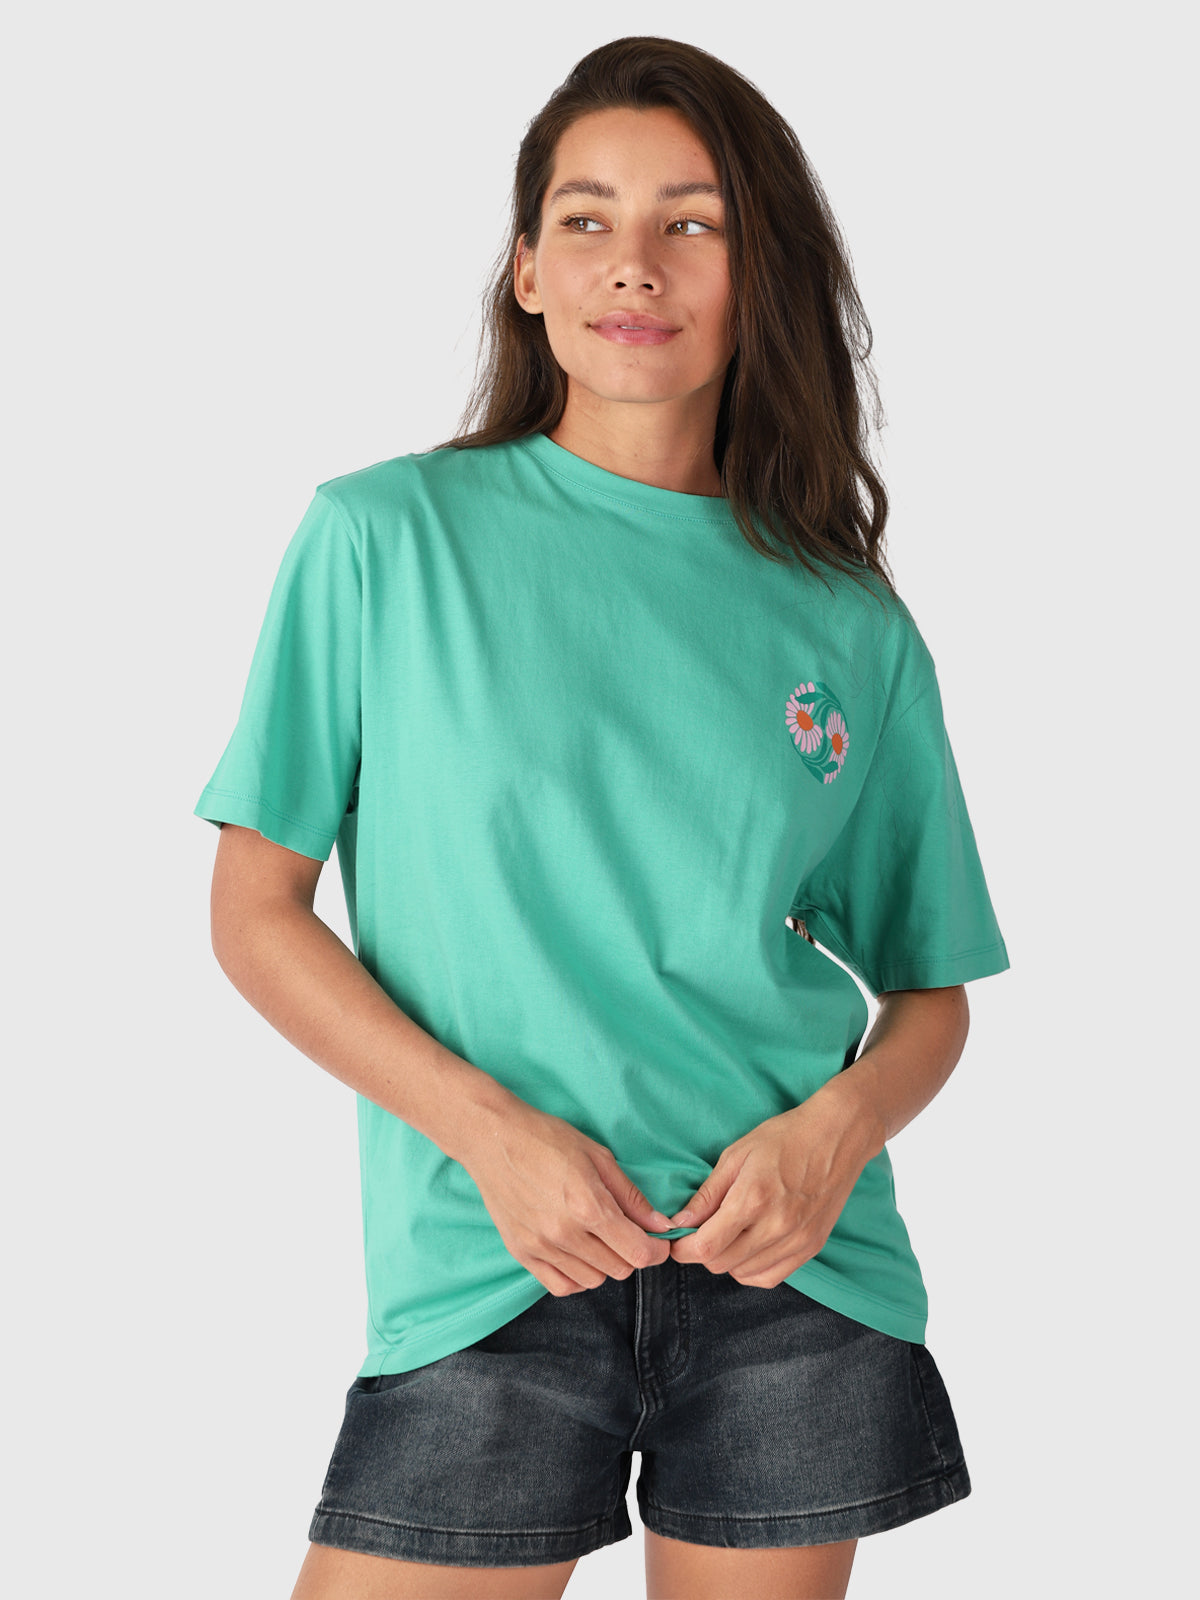 Women - Sale T-Shirts Tops 